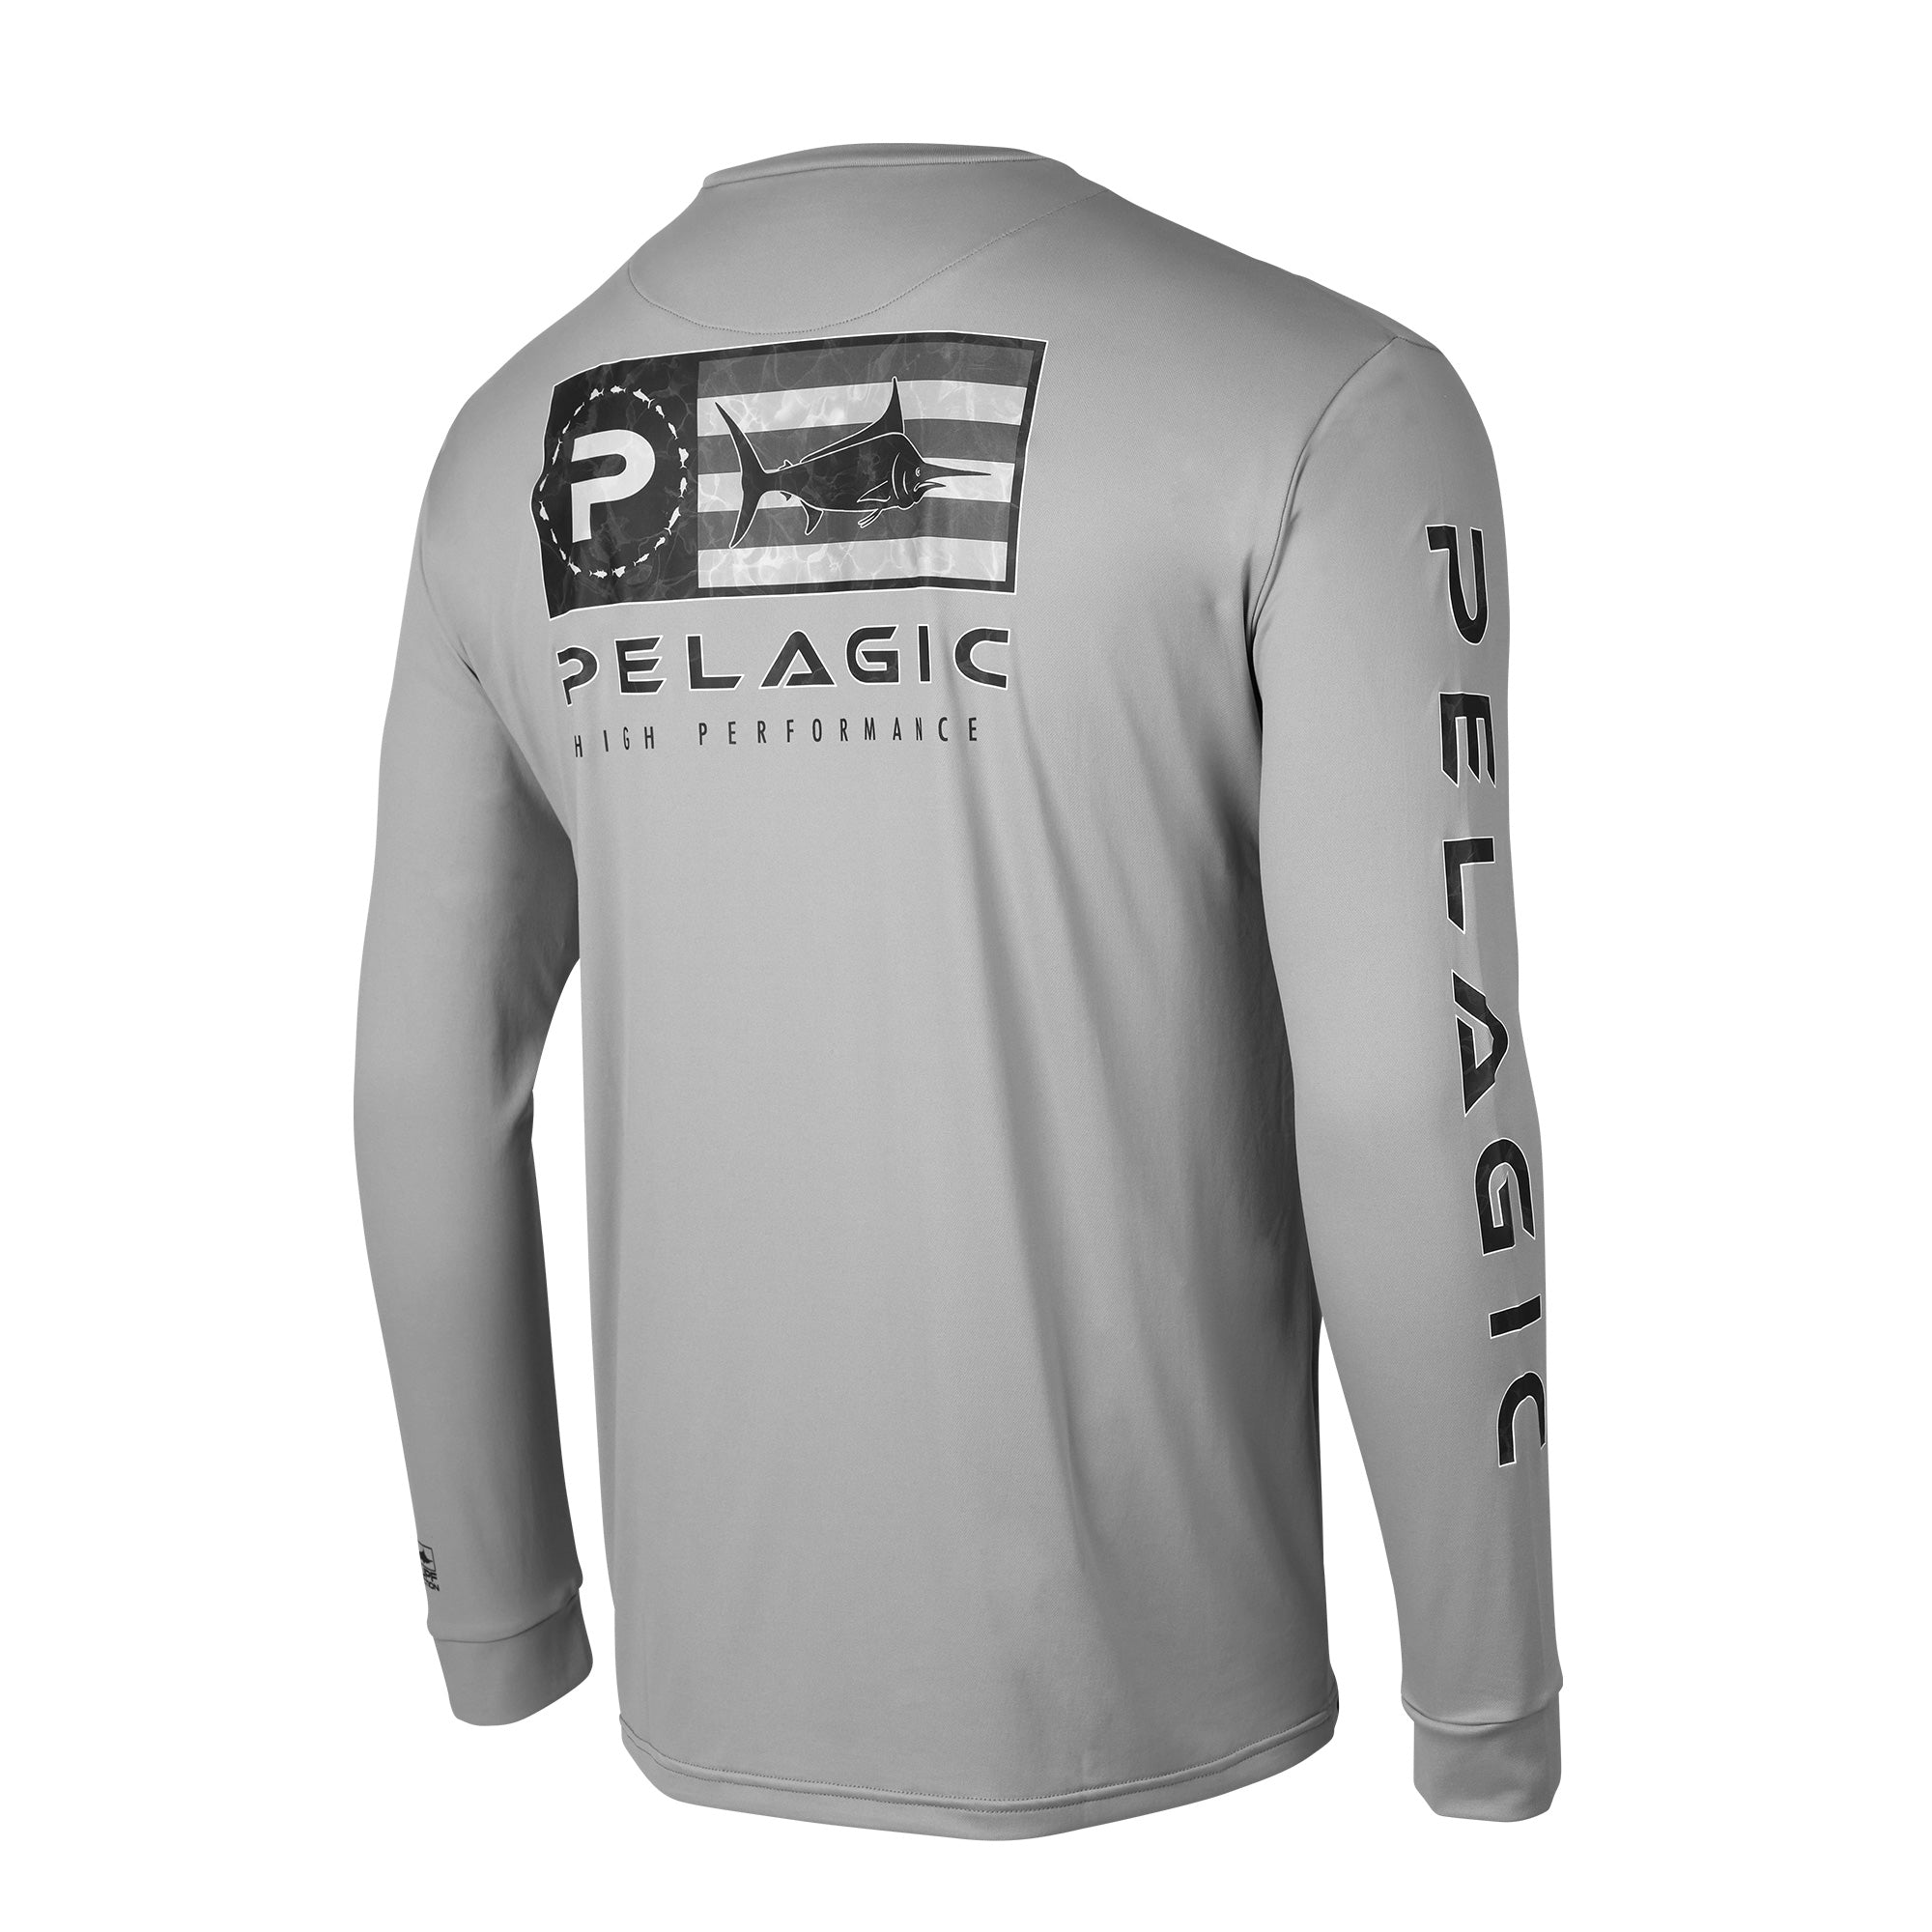 Pelagic White Athletic Long Sleeve Shirts for Men